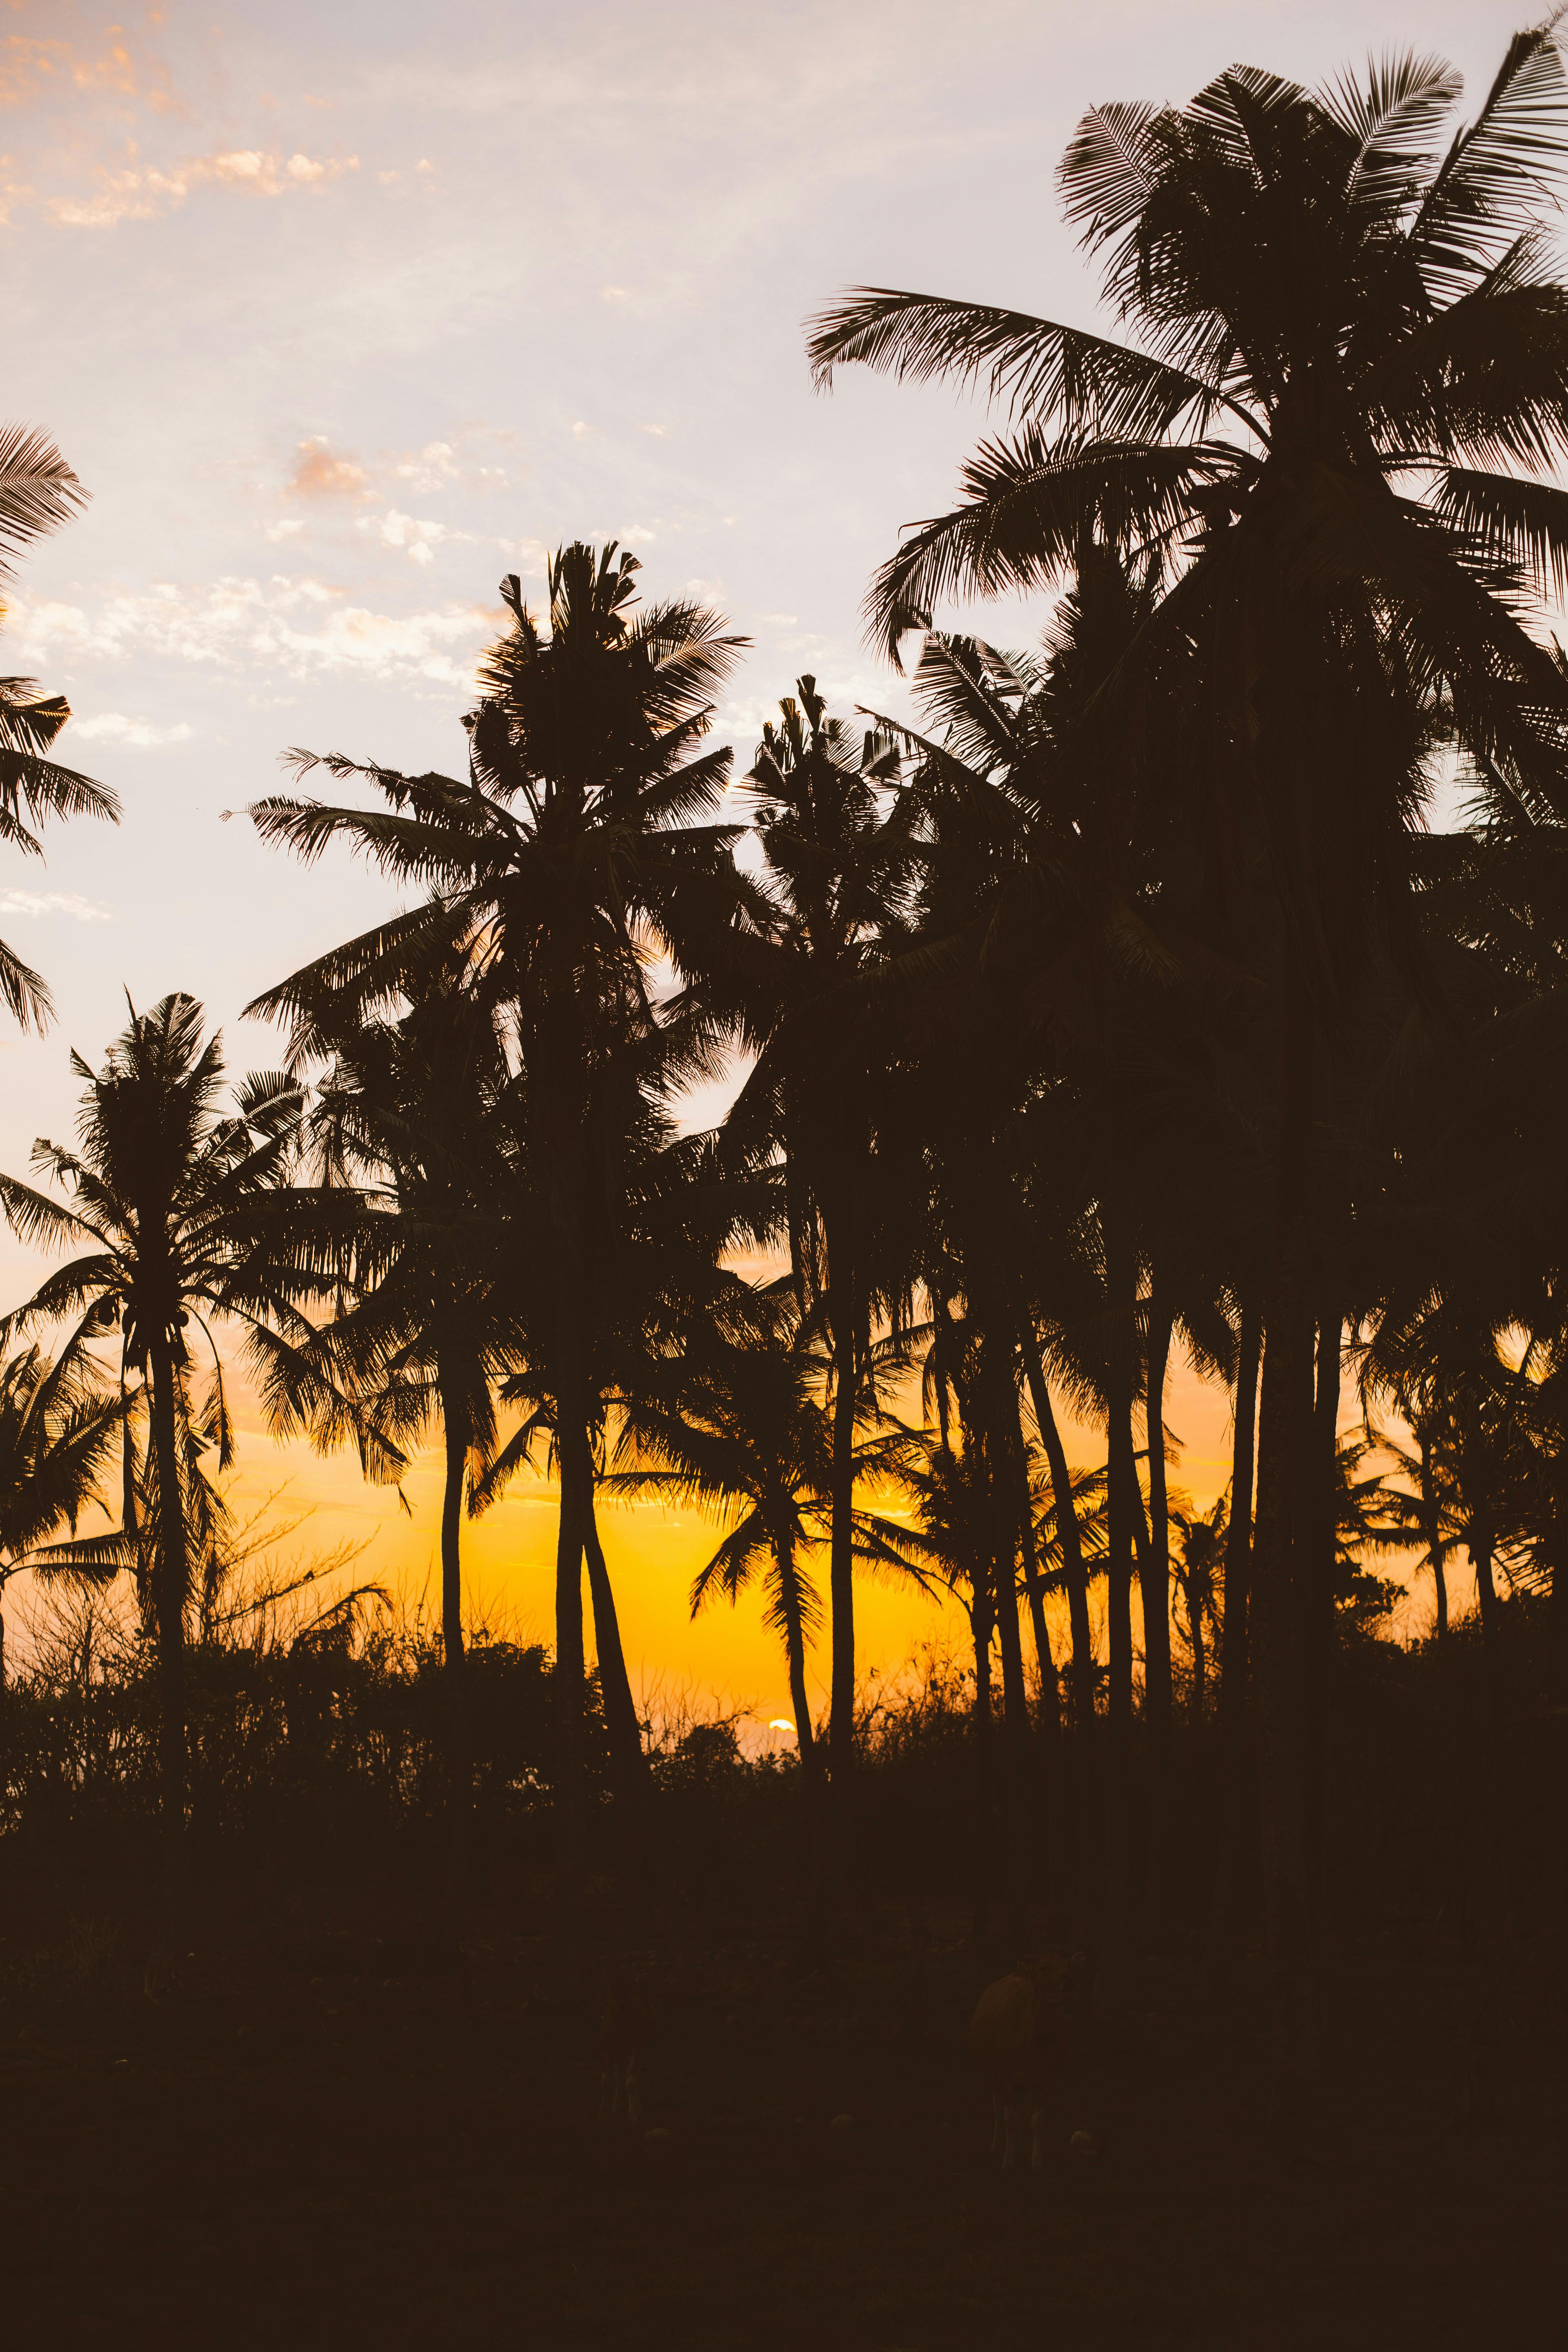 Wallpaper Palm Tree Under Orange Sky Background  Download Free Image